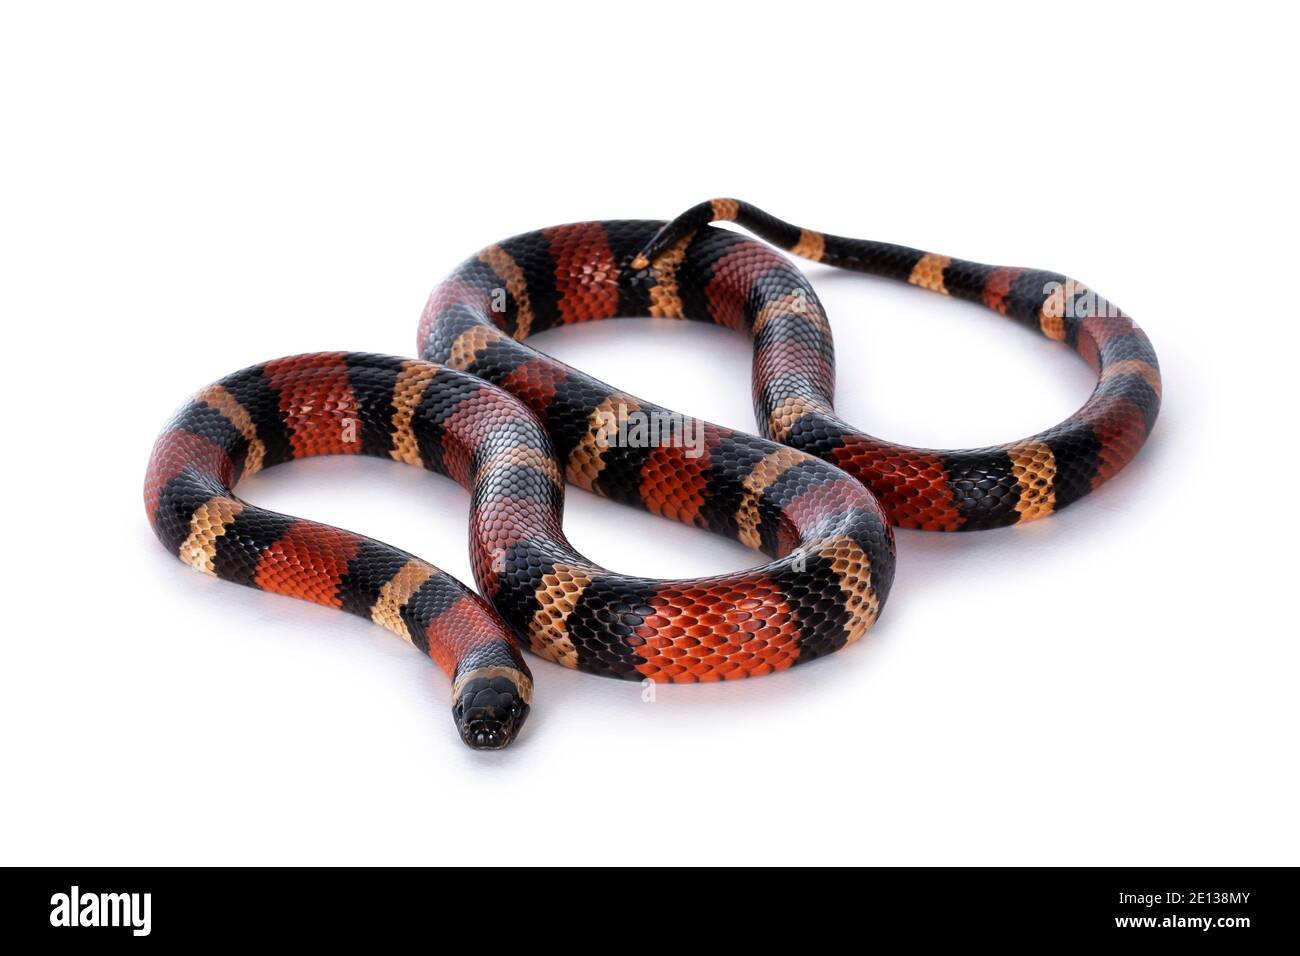 Adult female Pueblan milk snake aka Lampropeltis triangulum campbelli snake, isolated on a white background. Stock Photo